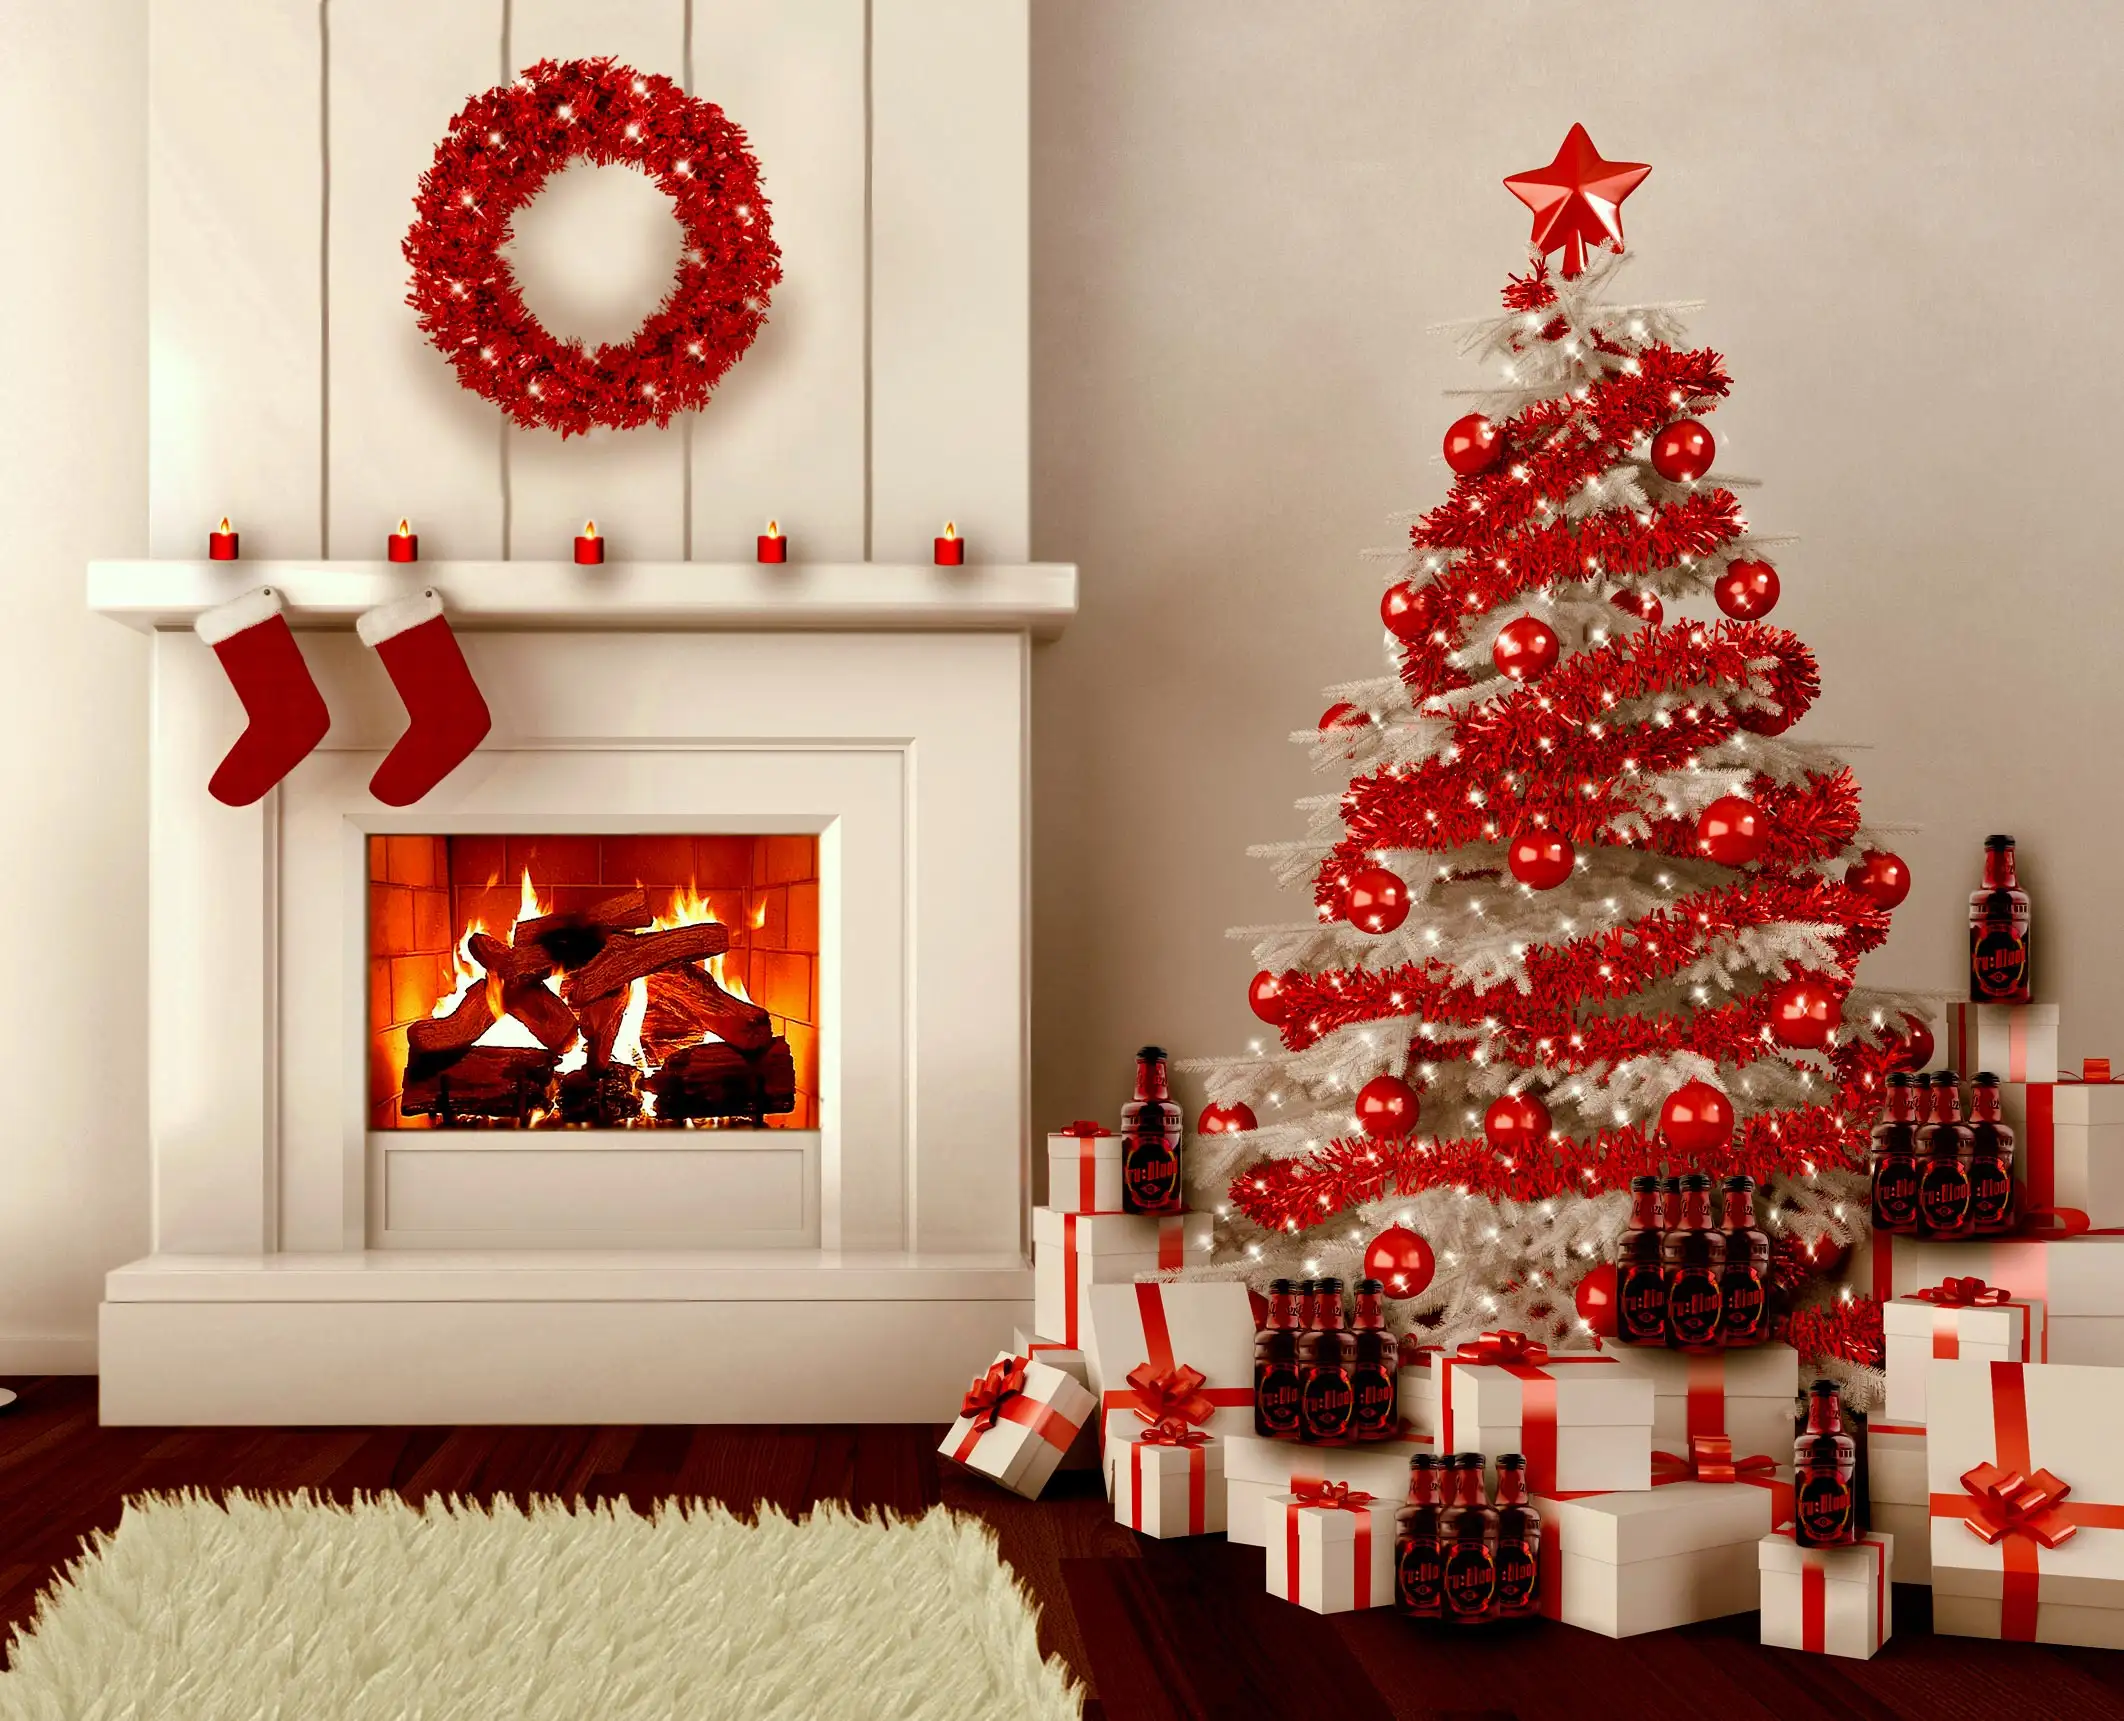 Choosing a color scheme for Christmas decorations